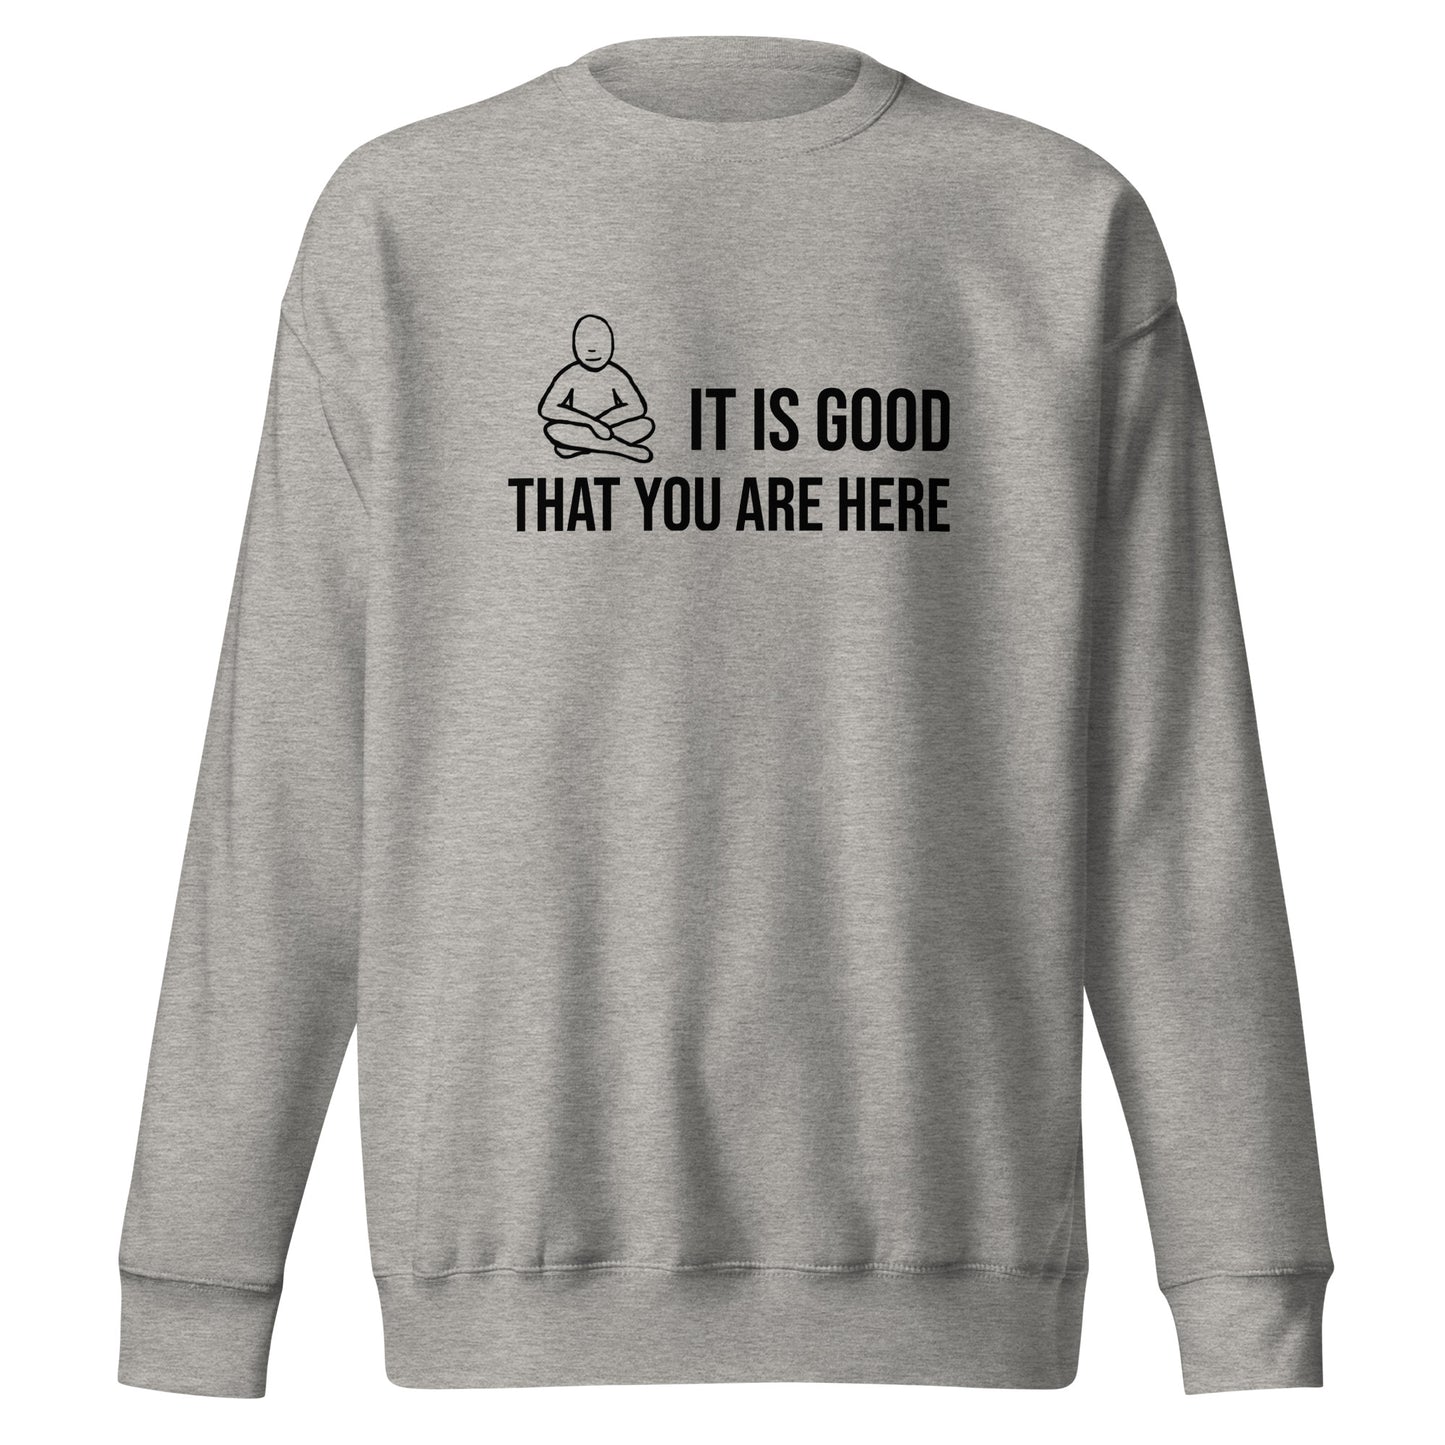 "It Is Good" Black Text - Unisex Premium Sweatshirt